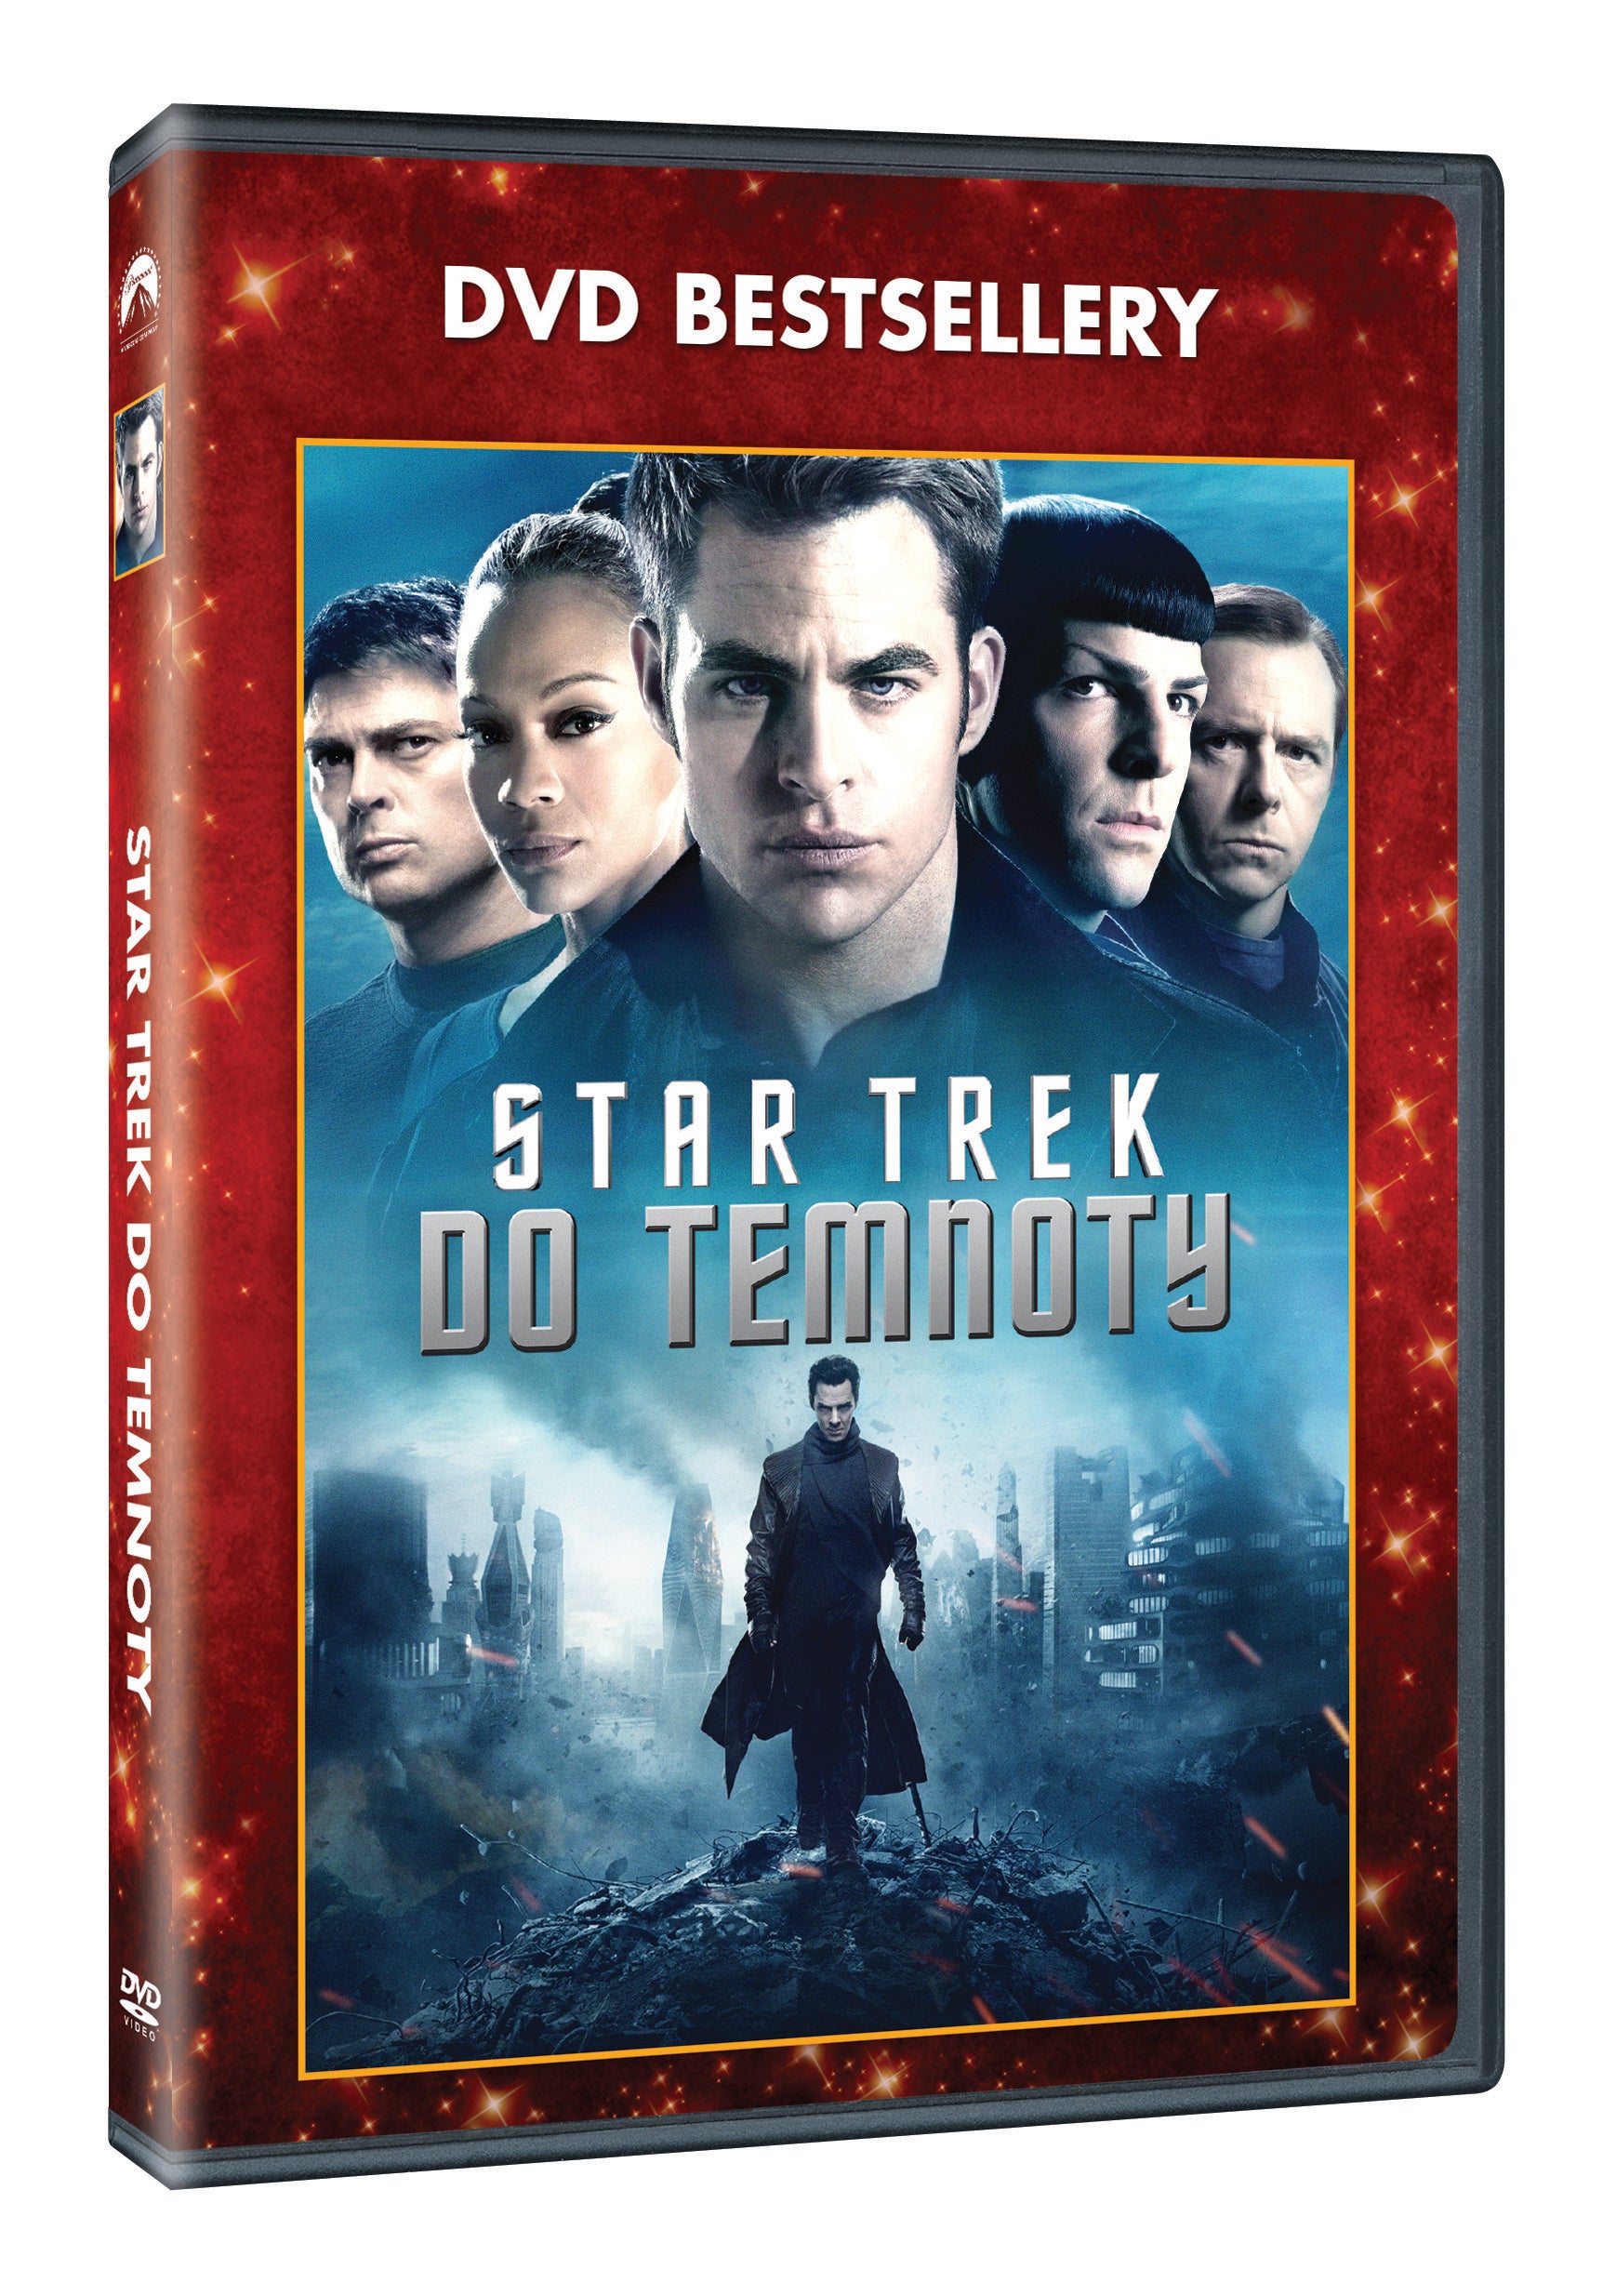 Star Trek: Do temnoty – DVD-Bestseller (Star Trek into Darkness)